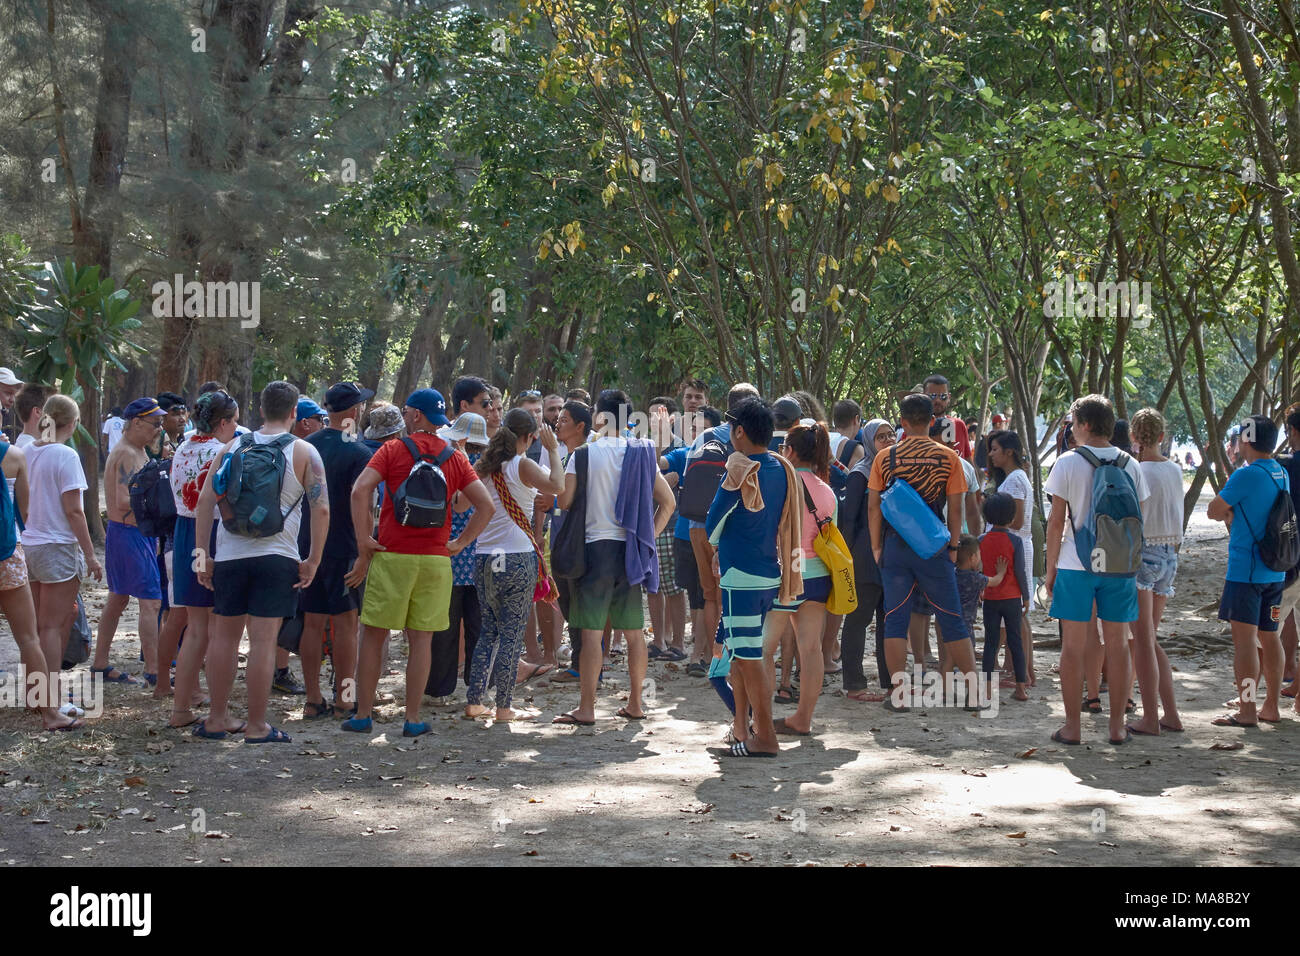 Thailand tourism. Crowd of tourists at Ao Nang beach Krabi Thailand awaiting boat trip Stock Photo